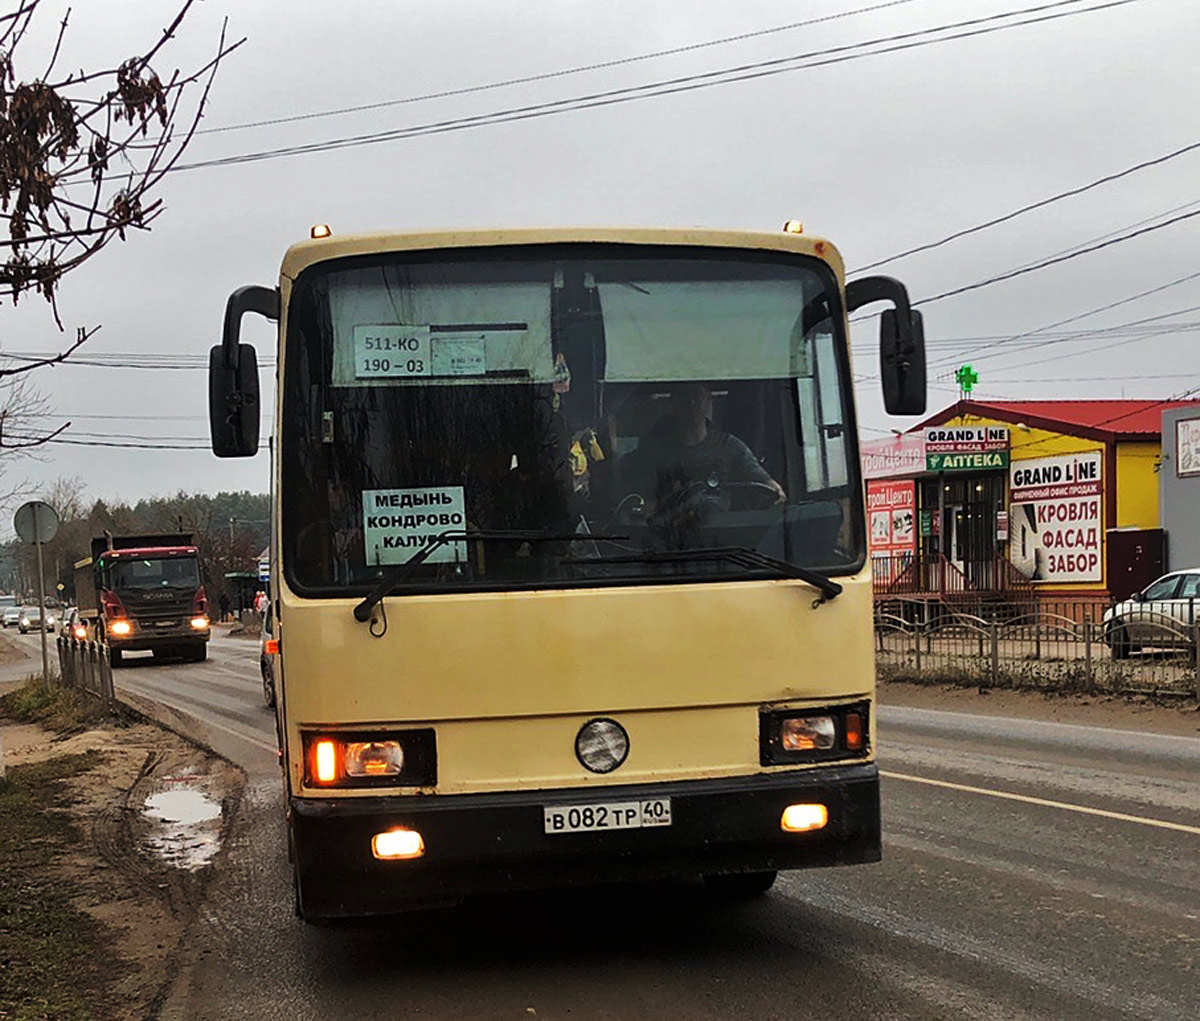 Калуга. Автобус ЛАЗ-4207JT (в082тр 40), маршрут 190-ОЗ Медынь - Калуга